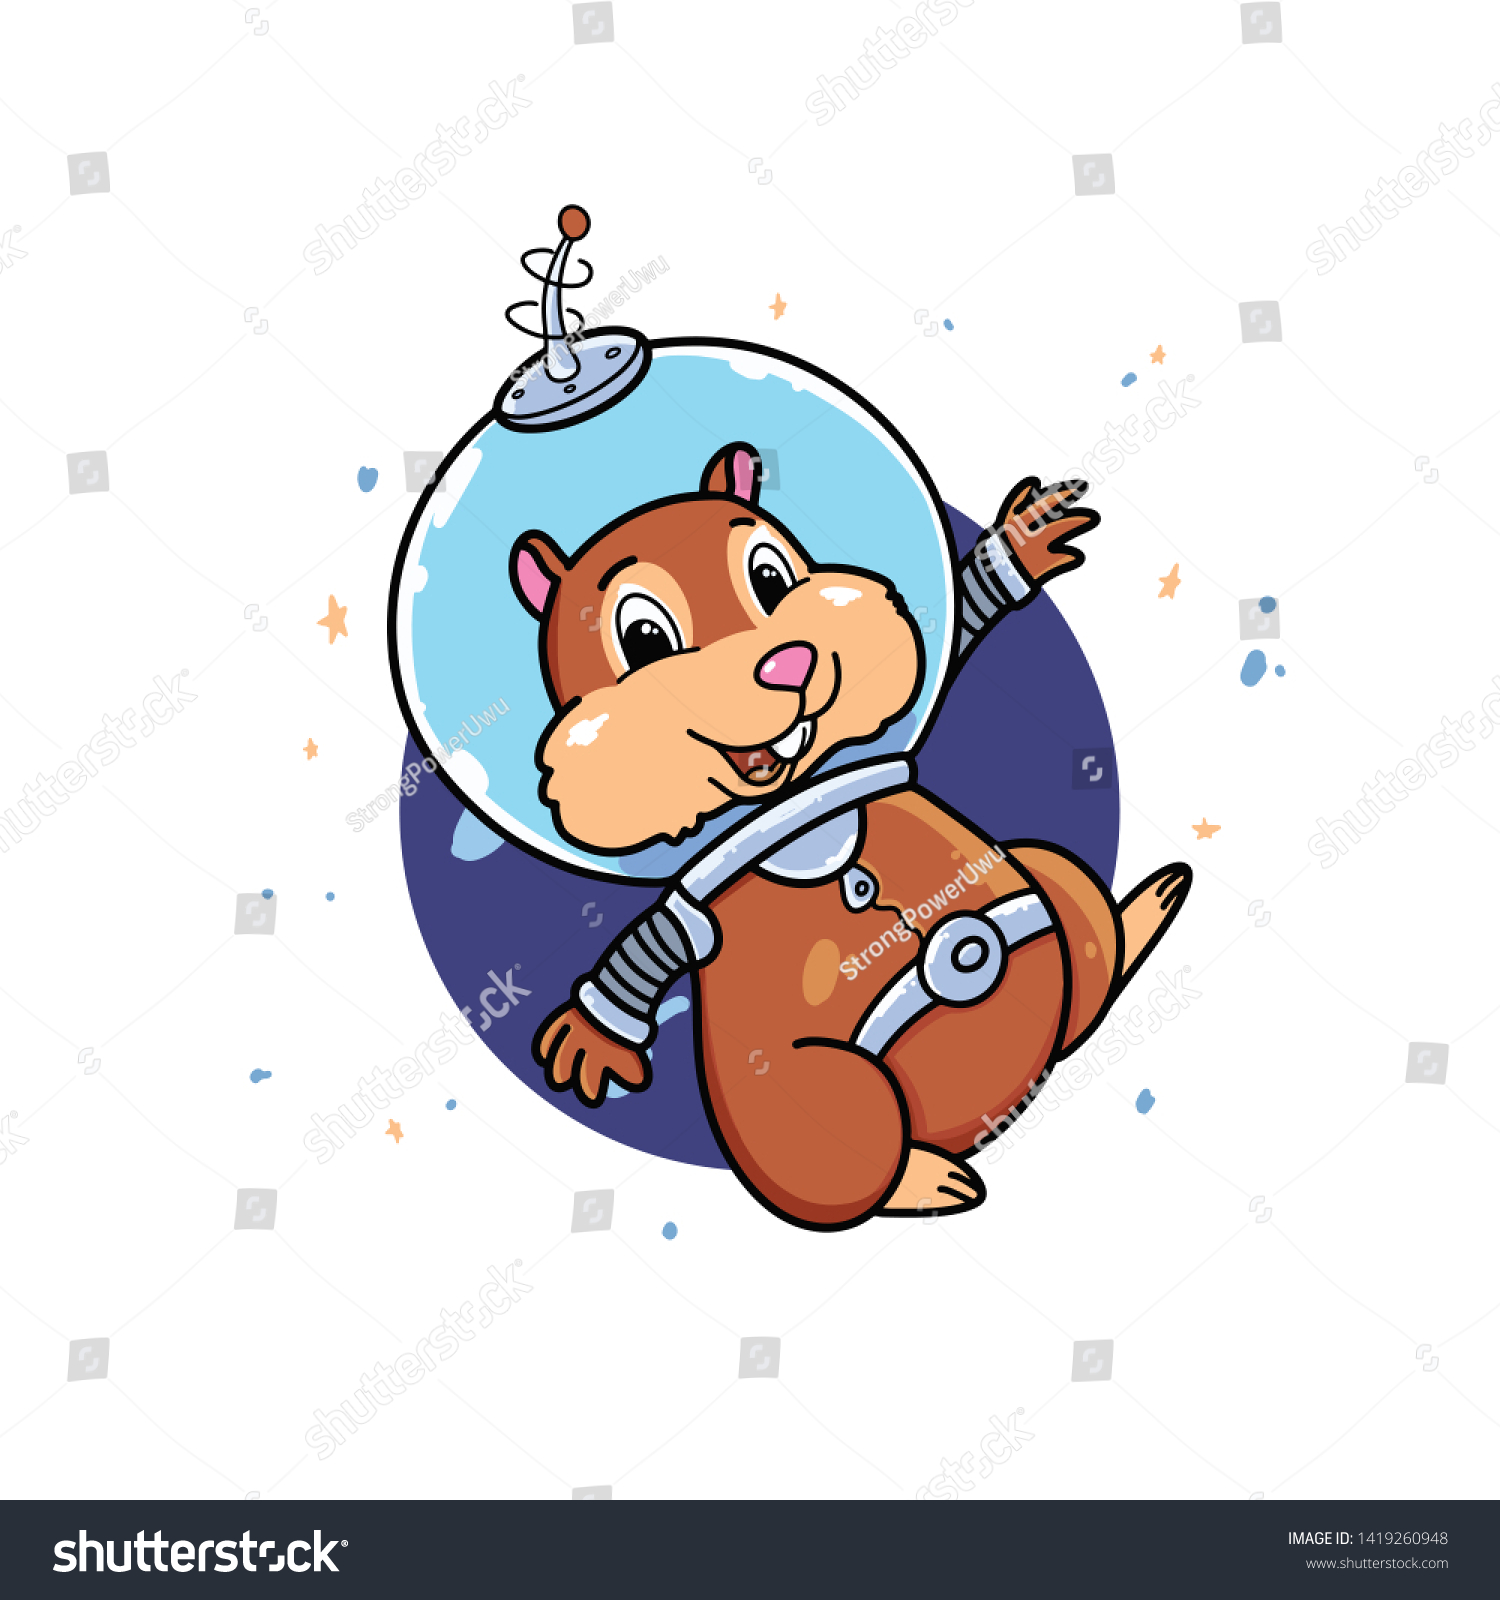 Cartoon Hamster Astronaut Space Doodle Cartoon Stock Vector Royalty Free 1419260948 Shutterstock 9651